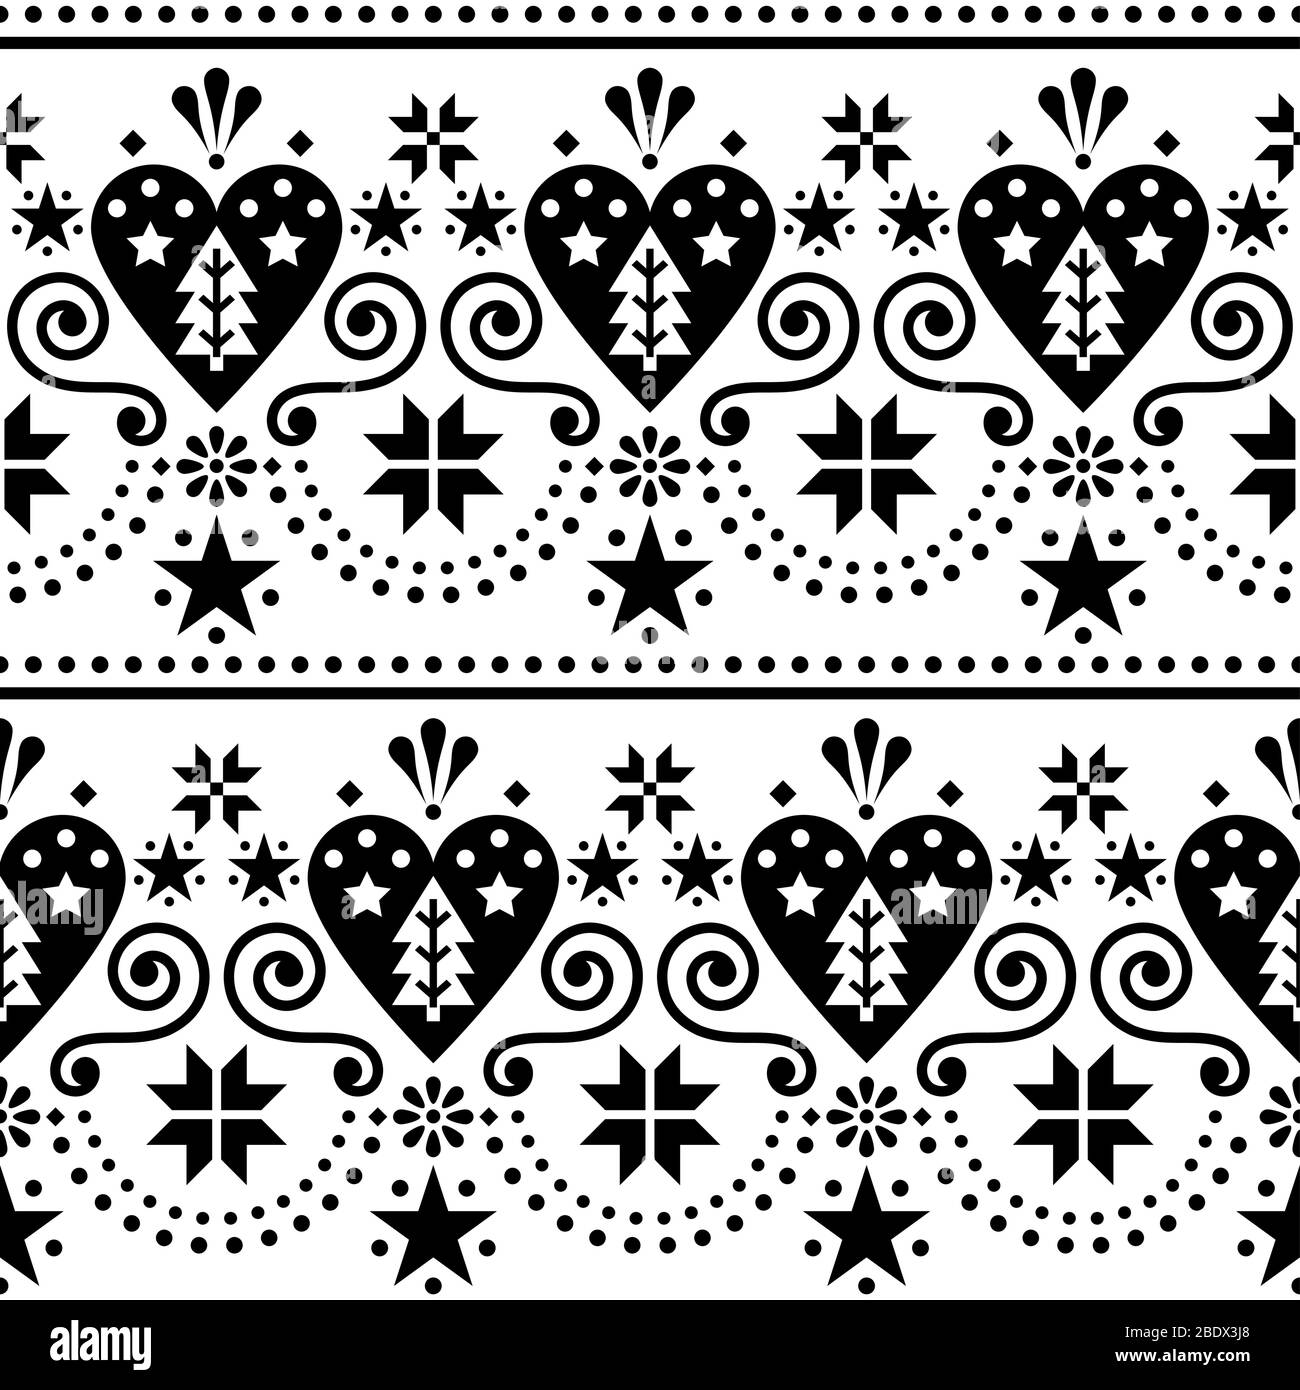 Scandinavian Christmas folk art seamless vector pattern - long, horizontal repetitive design with Christmas trees, snowflakes and hearts Stock Vector